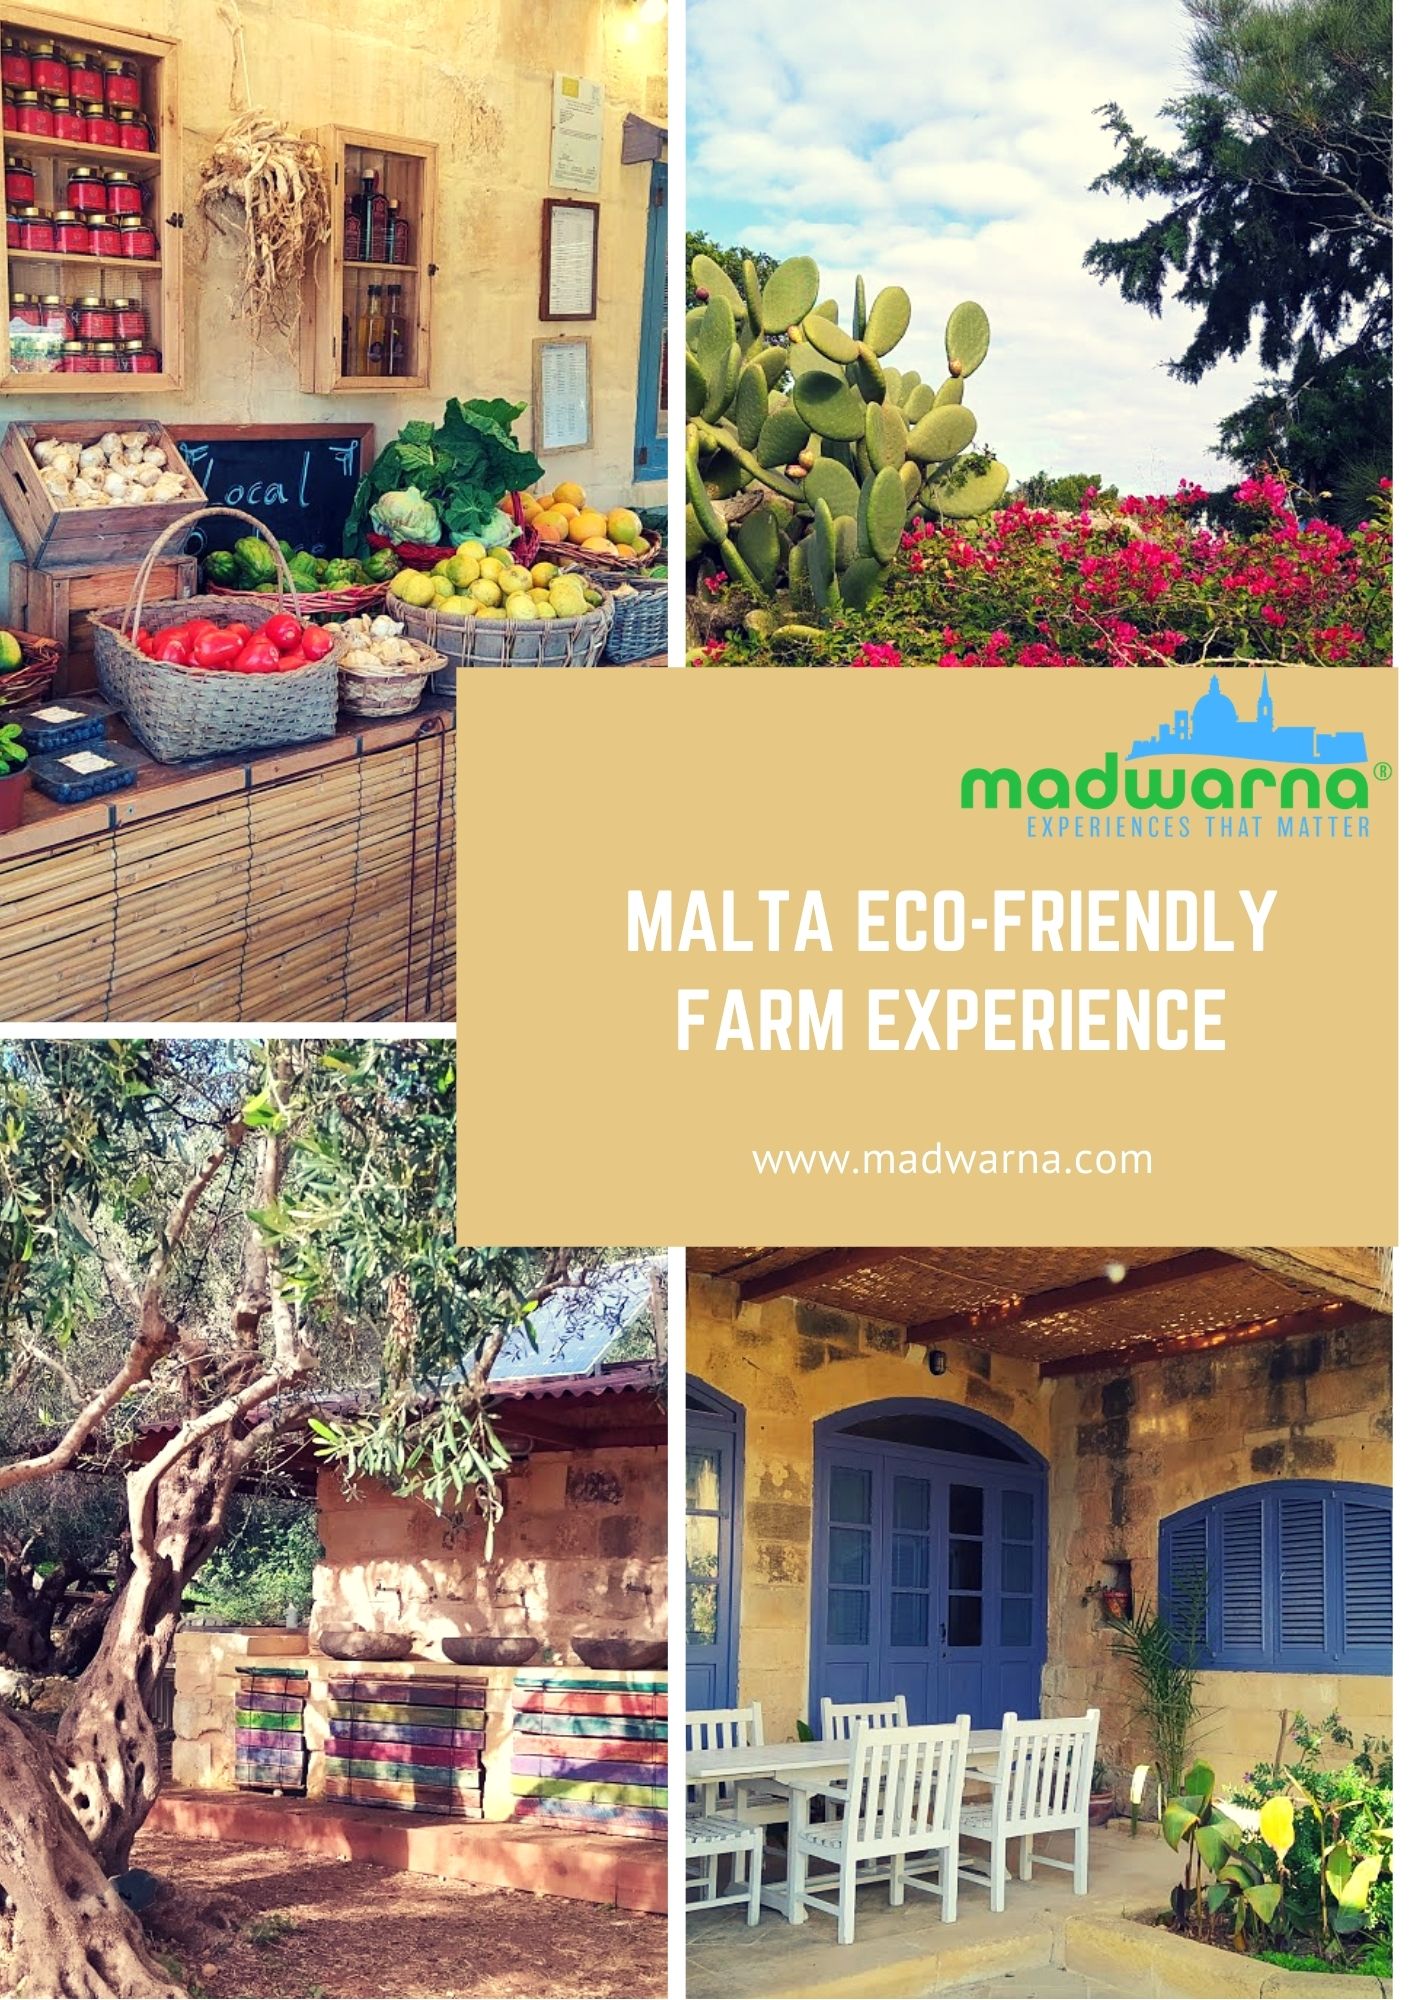 Malta Eco-friendly Farm Experience poster